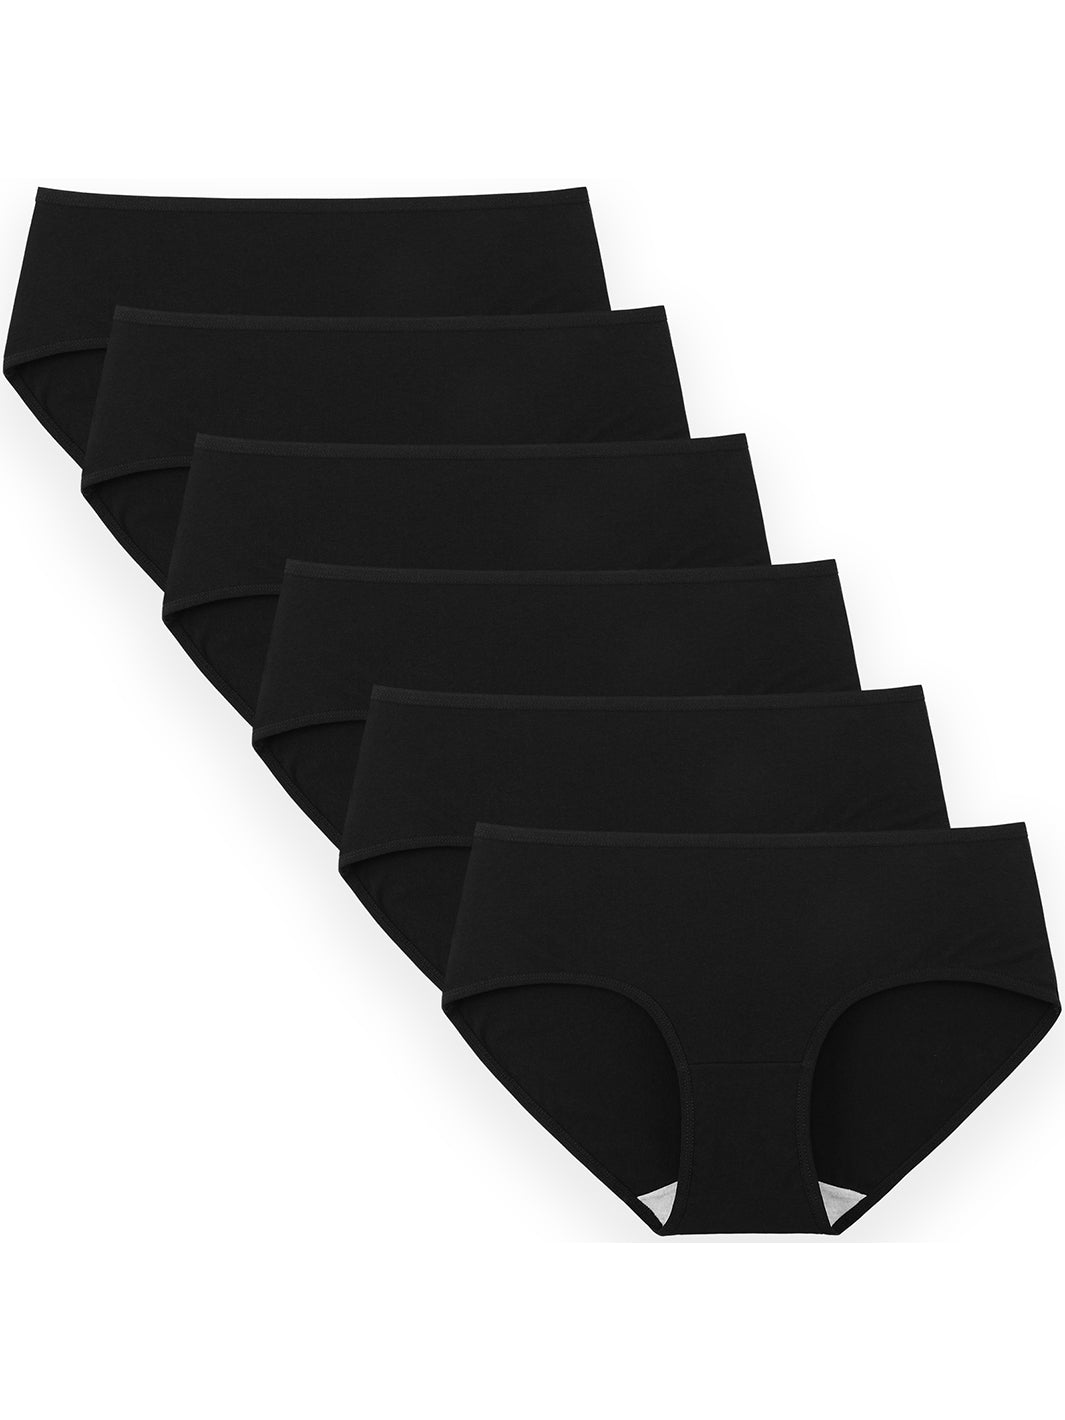 INNERSY Womens Underwear Cotton Hipster Panties Low Rise Basics Underwear  Set 6-Pack (Large, Vintage Dark) 